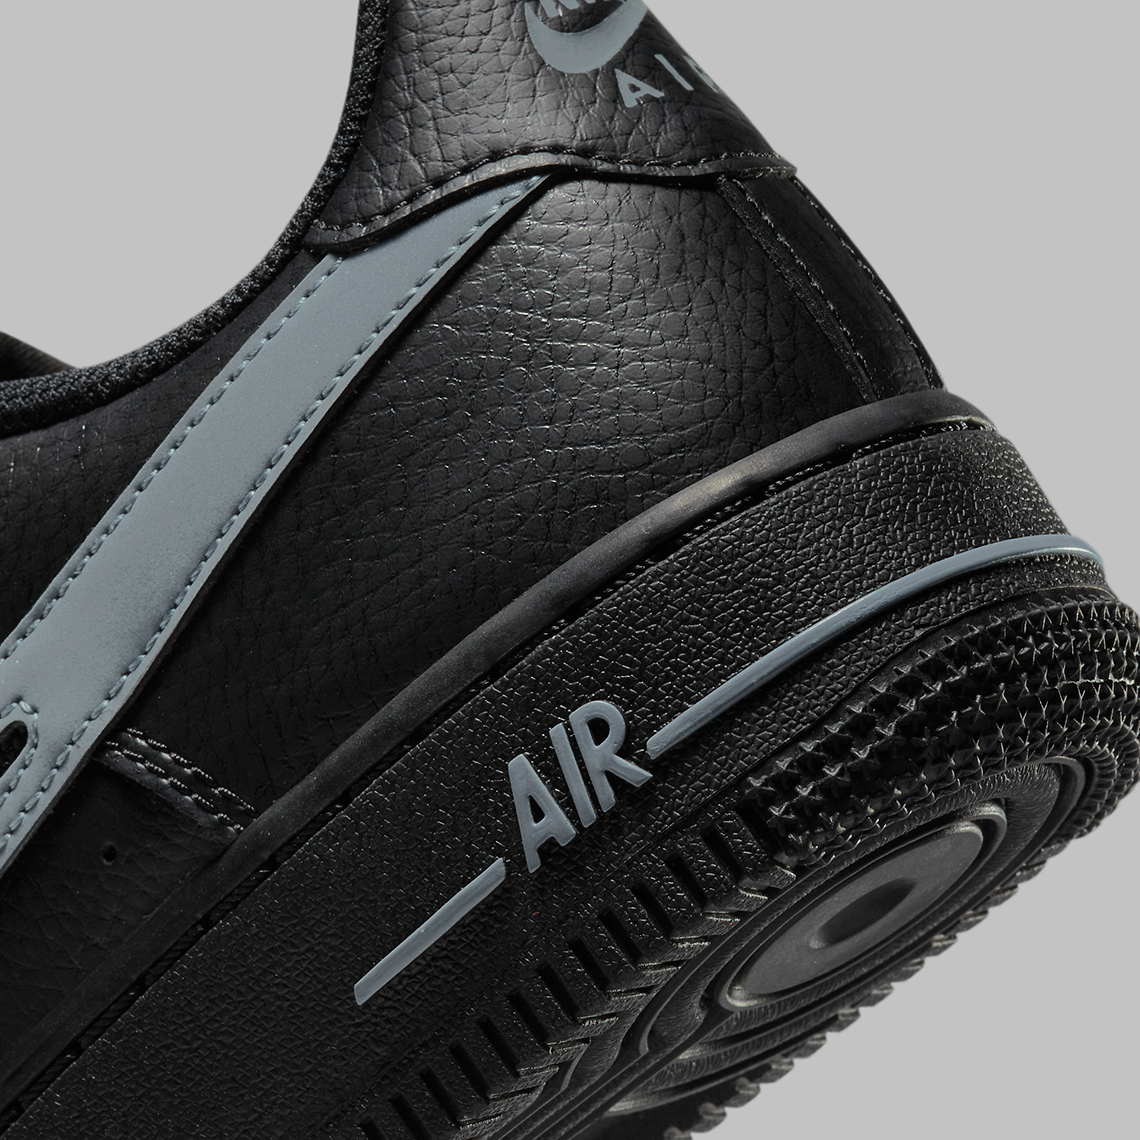 Nike nike magista obra 2 blackout Low Gs Cut Out Black Grey Fq2413 001 4